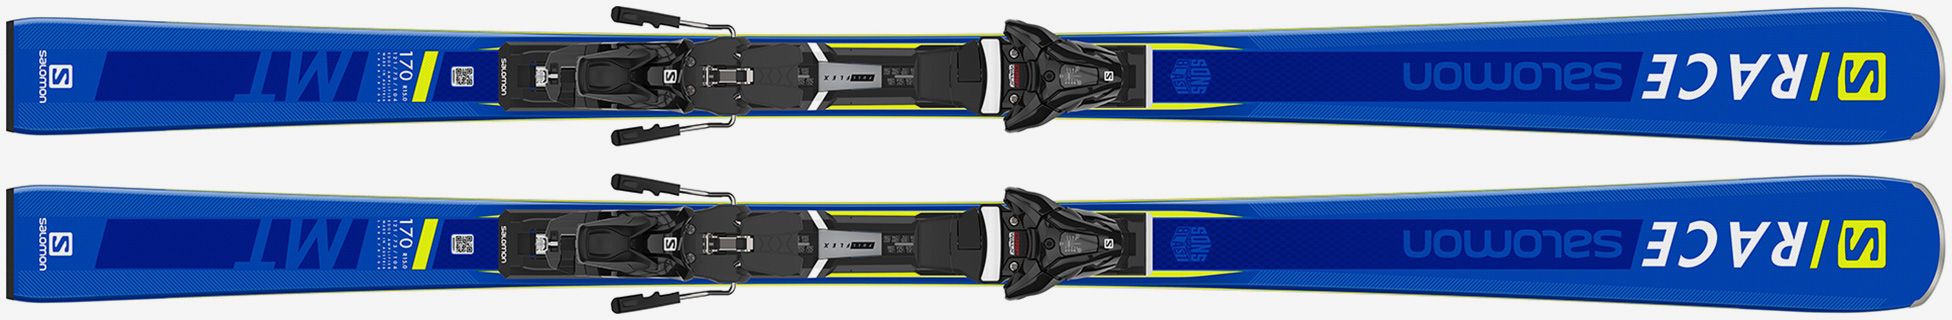 SALOMON E S RACE MT + Z12 GW F80 2020